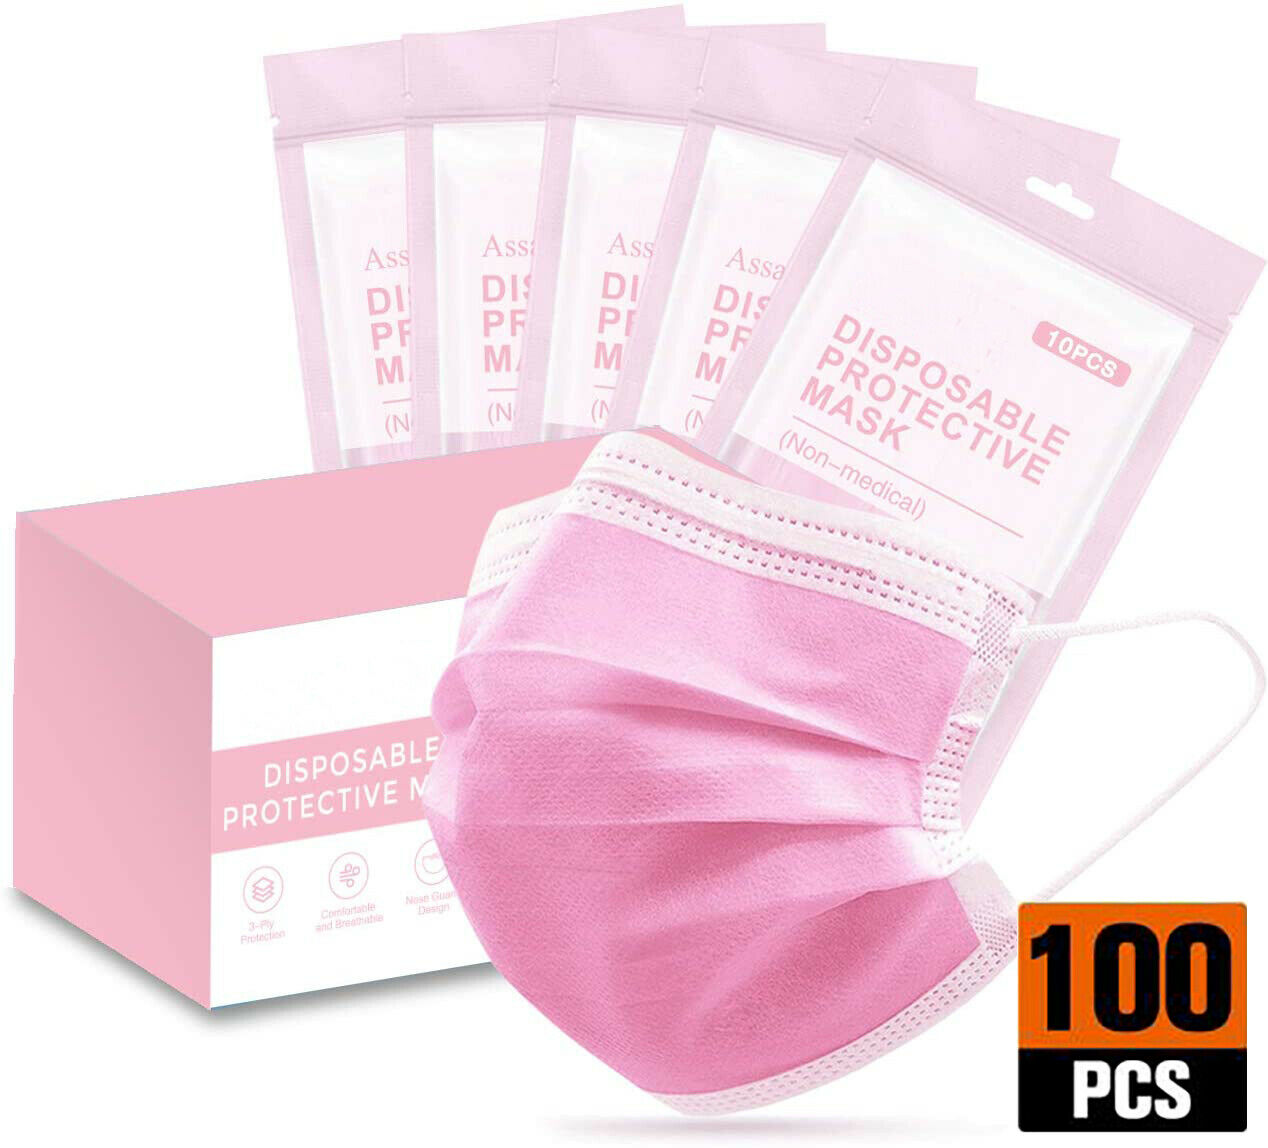 50/100 PCS Pink Color Face Mask Mouth Nose Protector Respirator Masks USA Seller